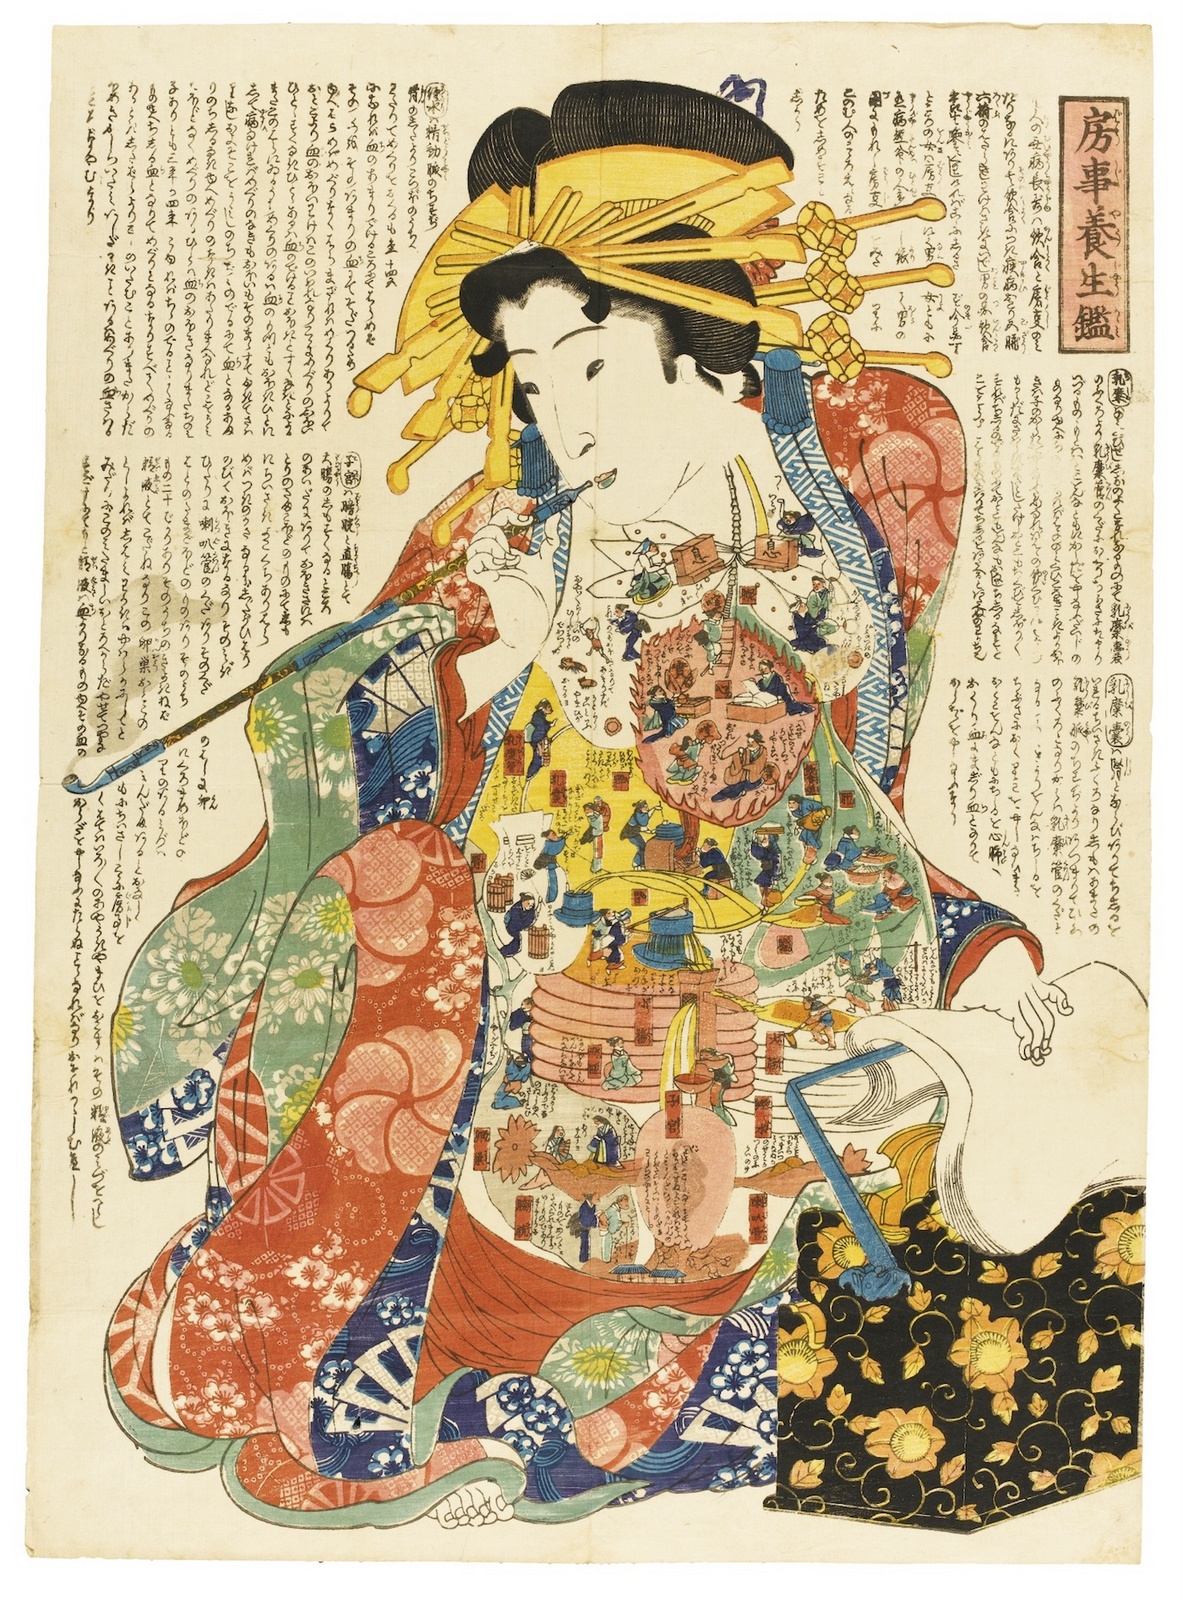 Bōji yōjō kagami diet advice for a healthy sex life Creator/Contributor: unknown, Artist Date: 1855